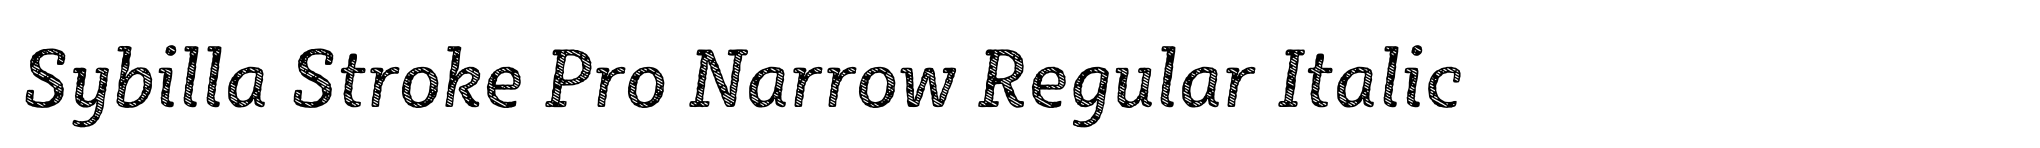 Sybilla Stroke Pro Narrow Regular Italic image